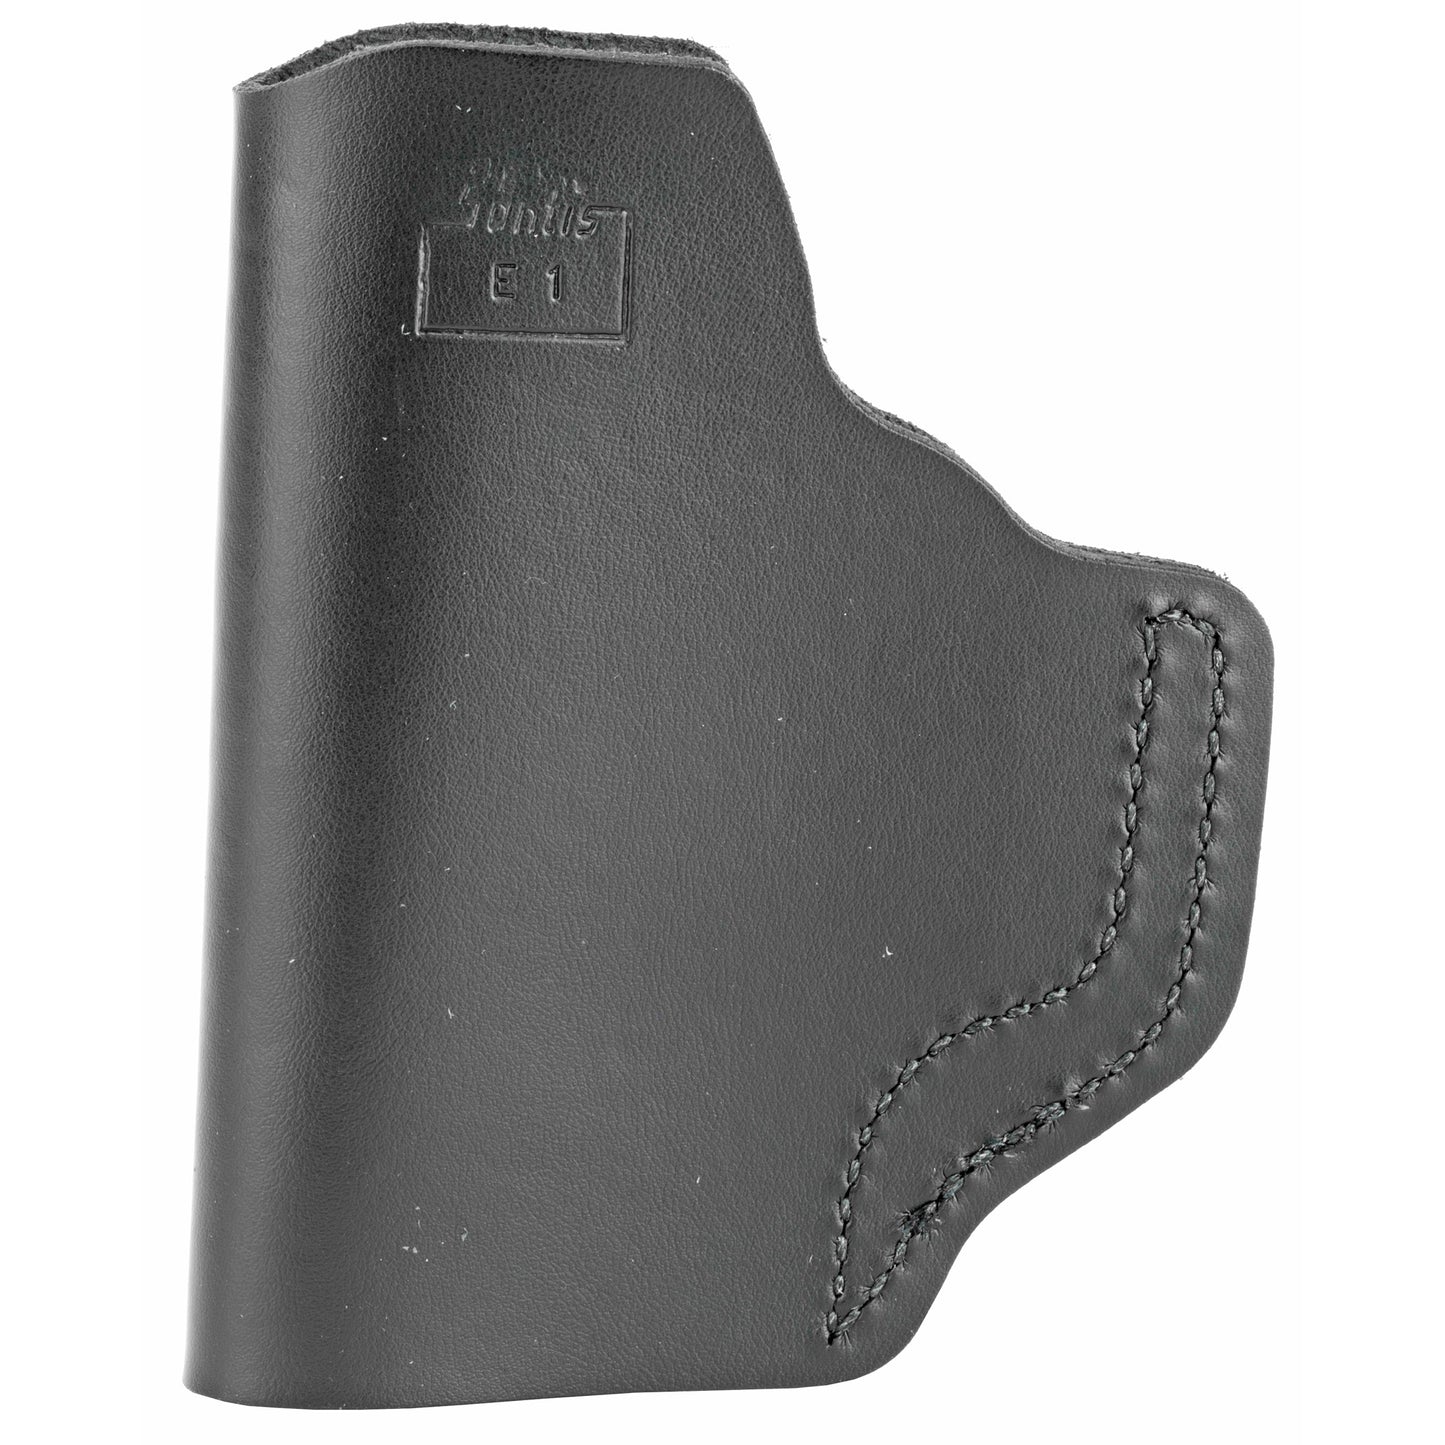 DeSantis Insider IWB Holster Fits Glock 26/27 Right Hand Black Leather 031BAE1Z0